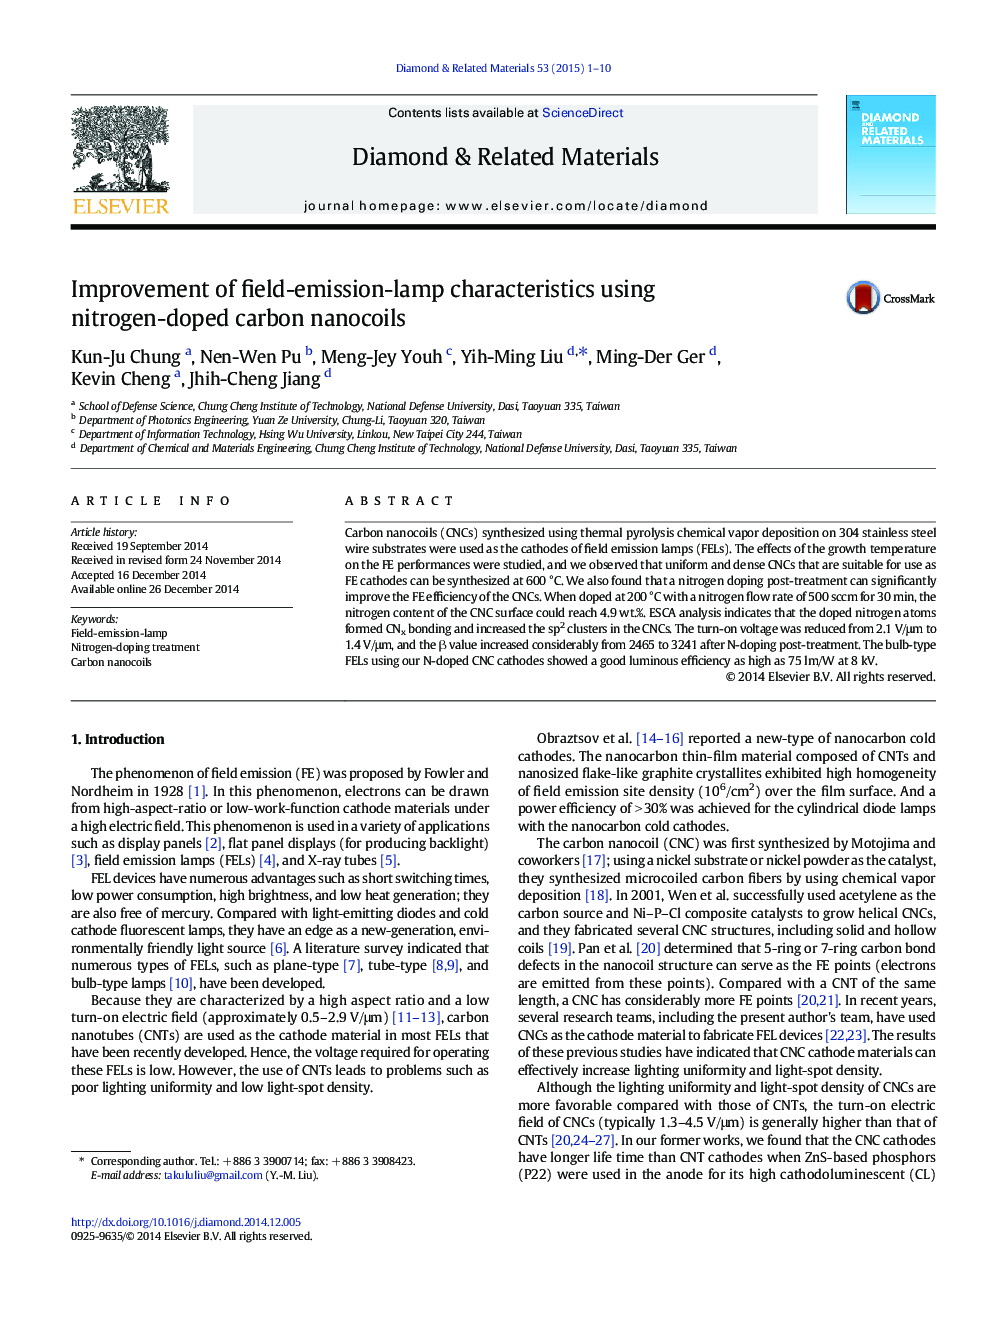 Improvement of field-emission-lamp characteristics using nitrogen-doped carbon nanocoils